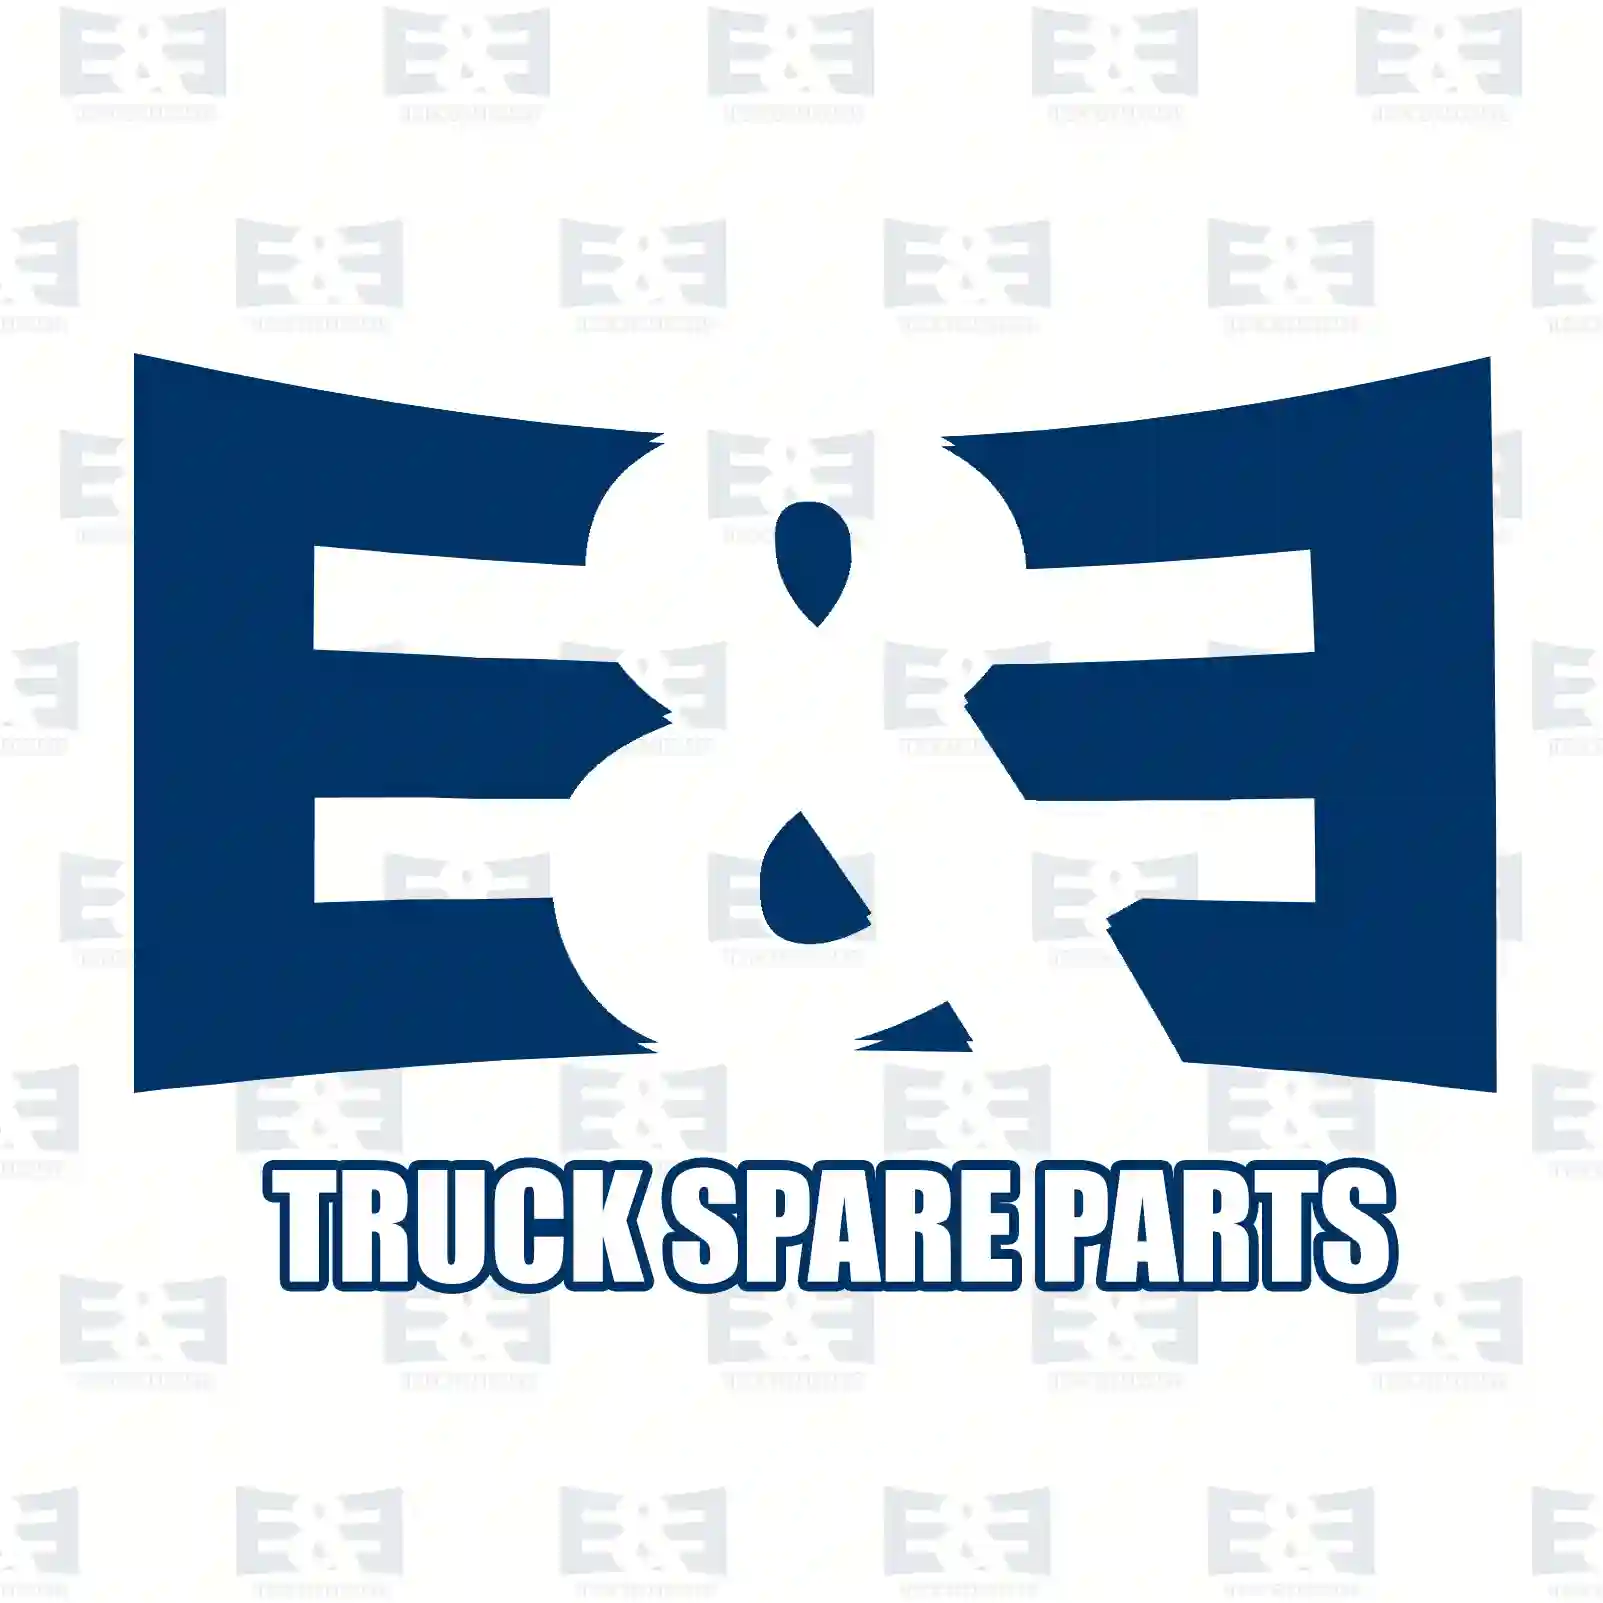  Clearance lamp || E&E Truck Spare Parts | Truck Spare Parts, Auotomotive Spare Parts